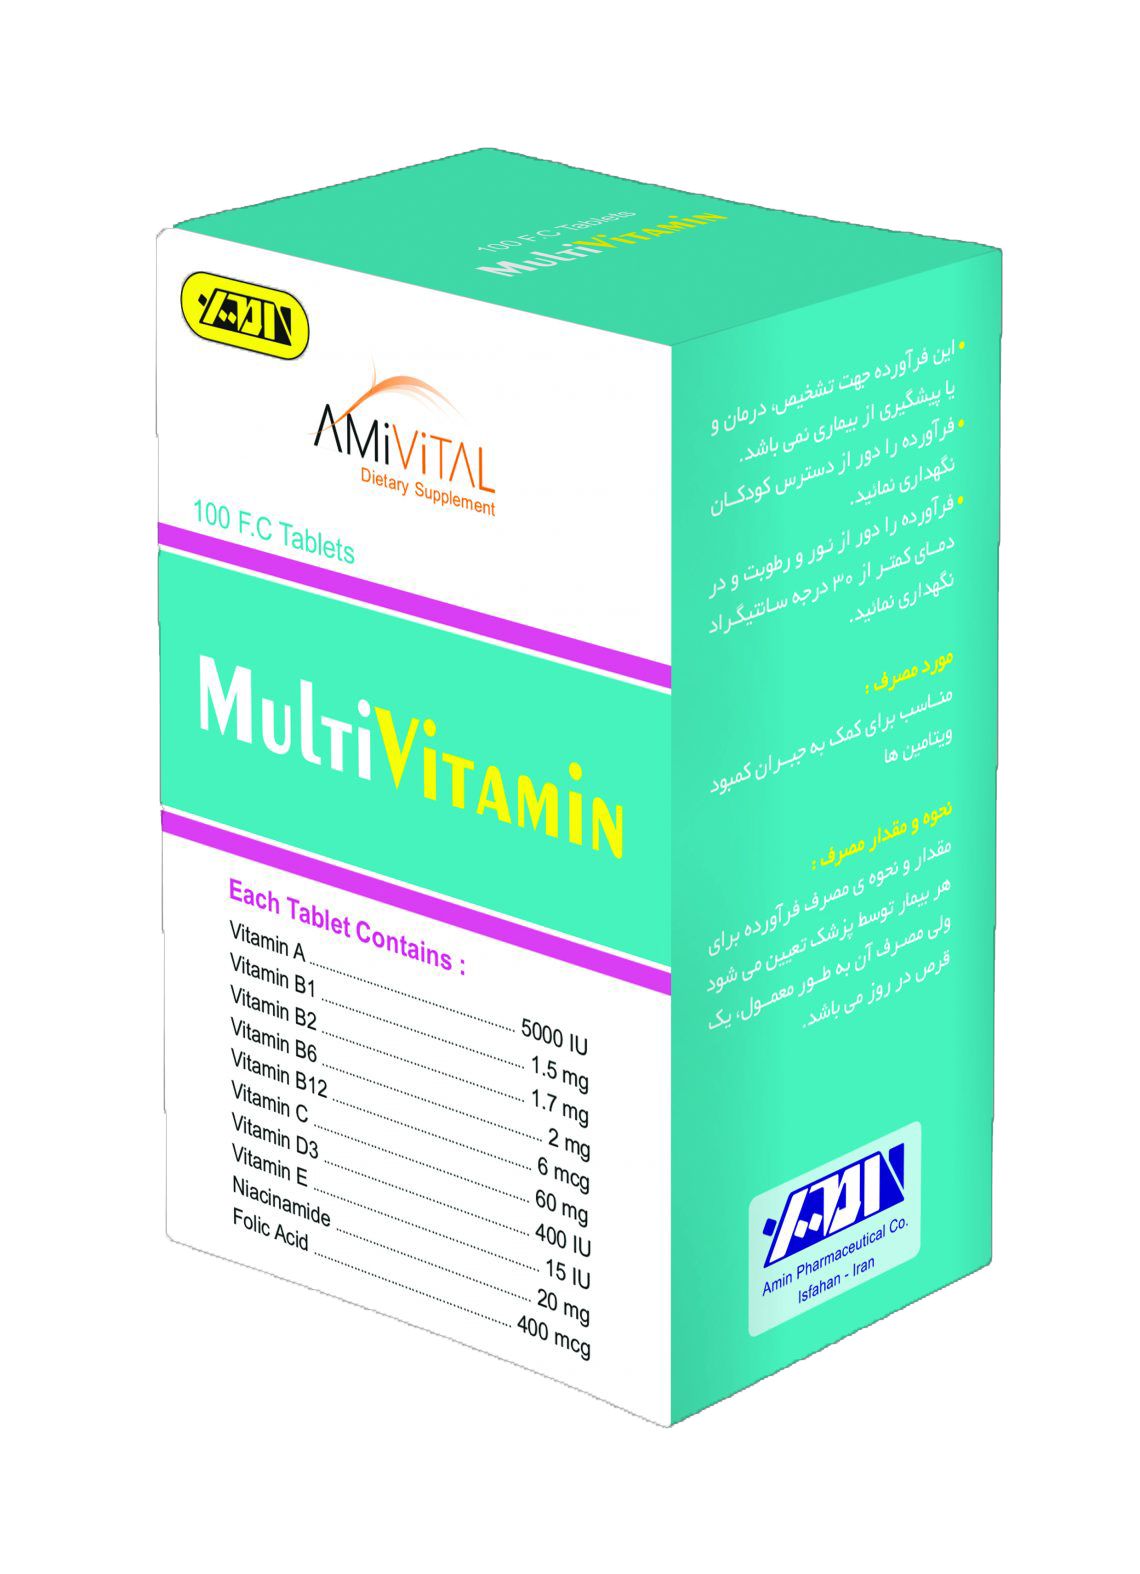 Ami Vital Multi Vitamin